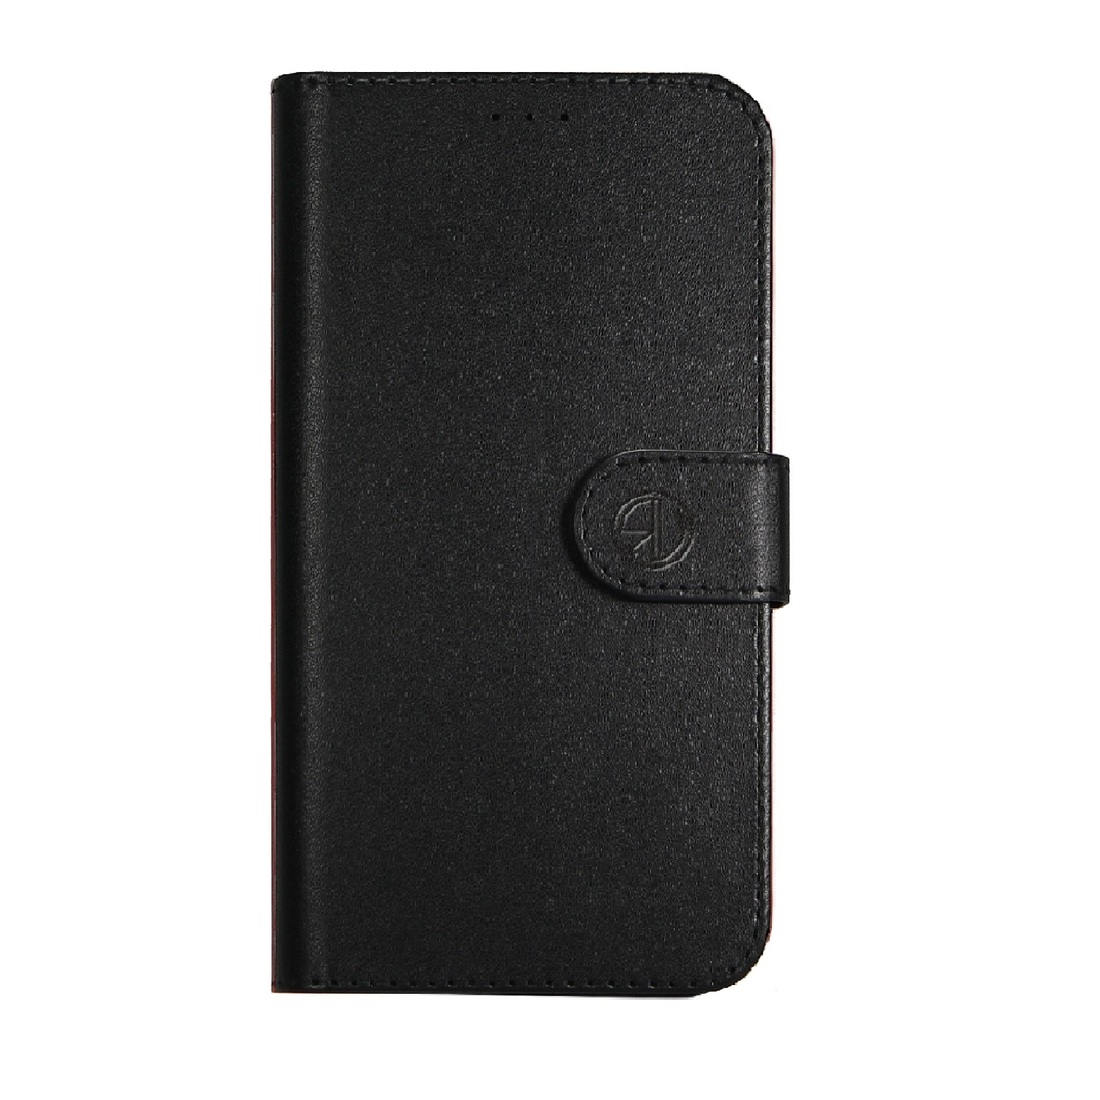 Super Wallet Case Samsung Galaxy S8 black